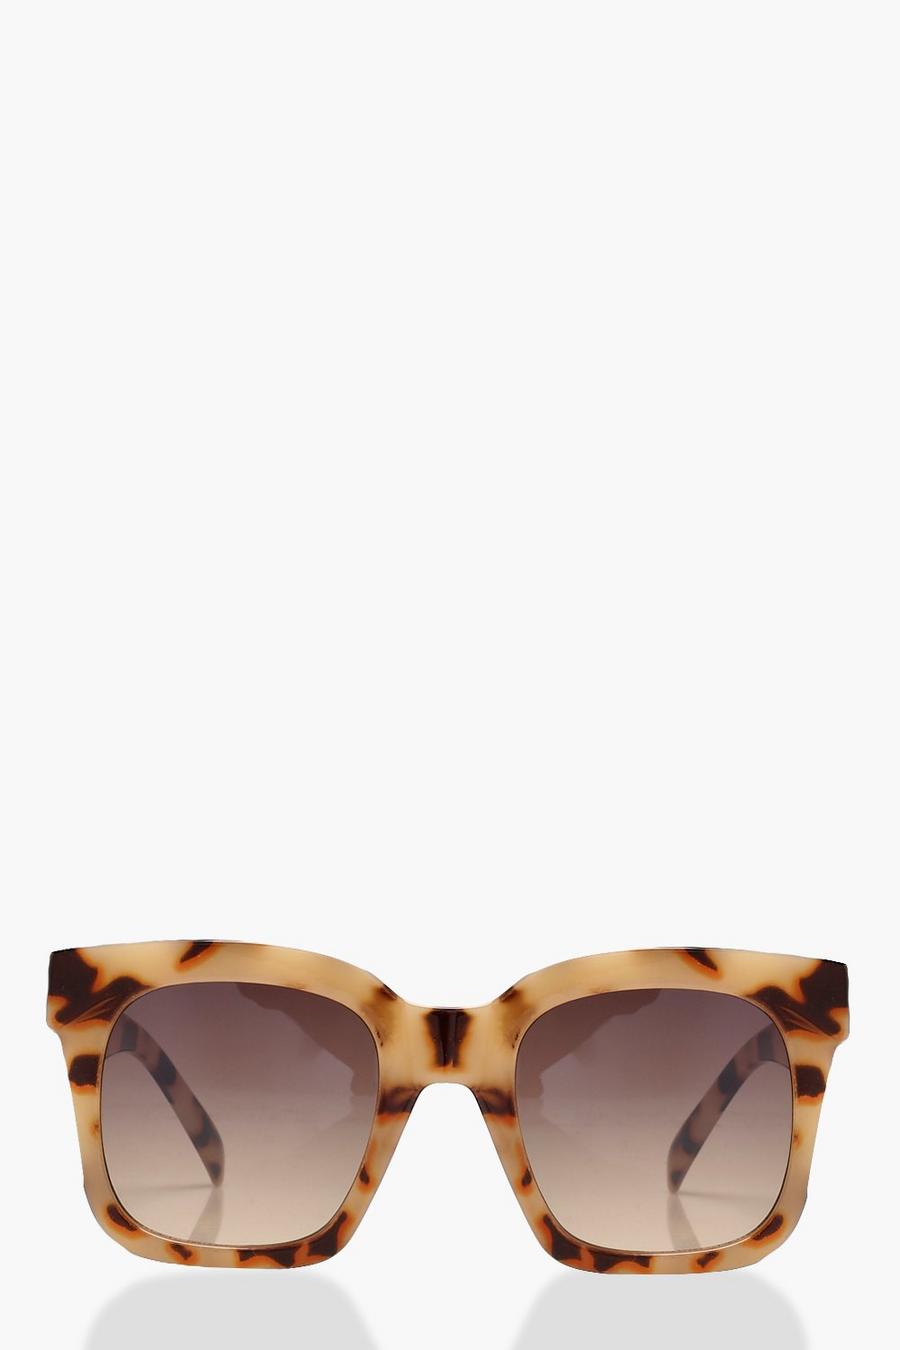 Cream Tortoiseshell Oversized Sunglasses image number 1